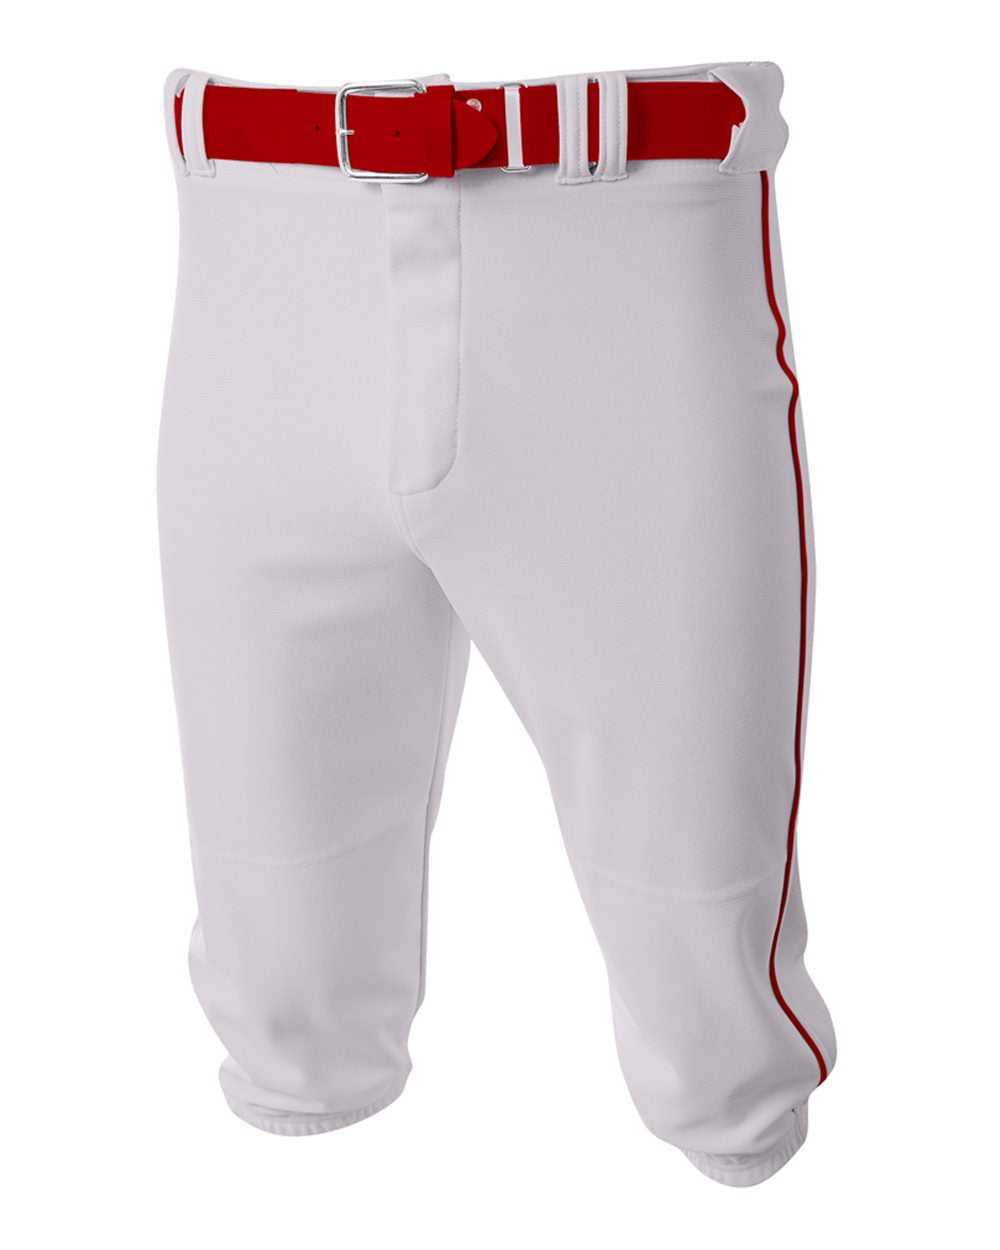 A4 N6003 Baseball Knicker Pant - White Cardinal - HIT a Double